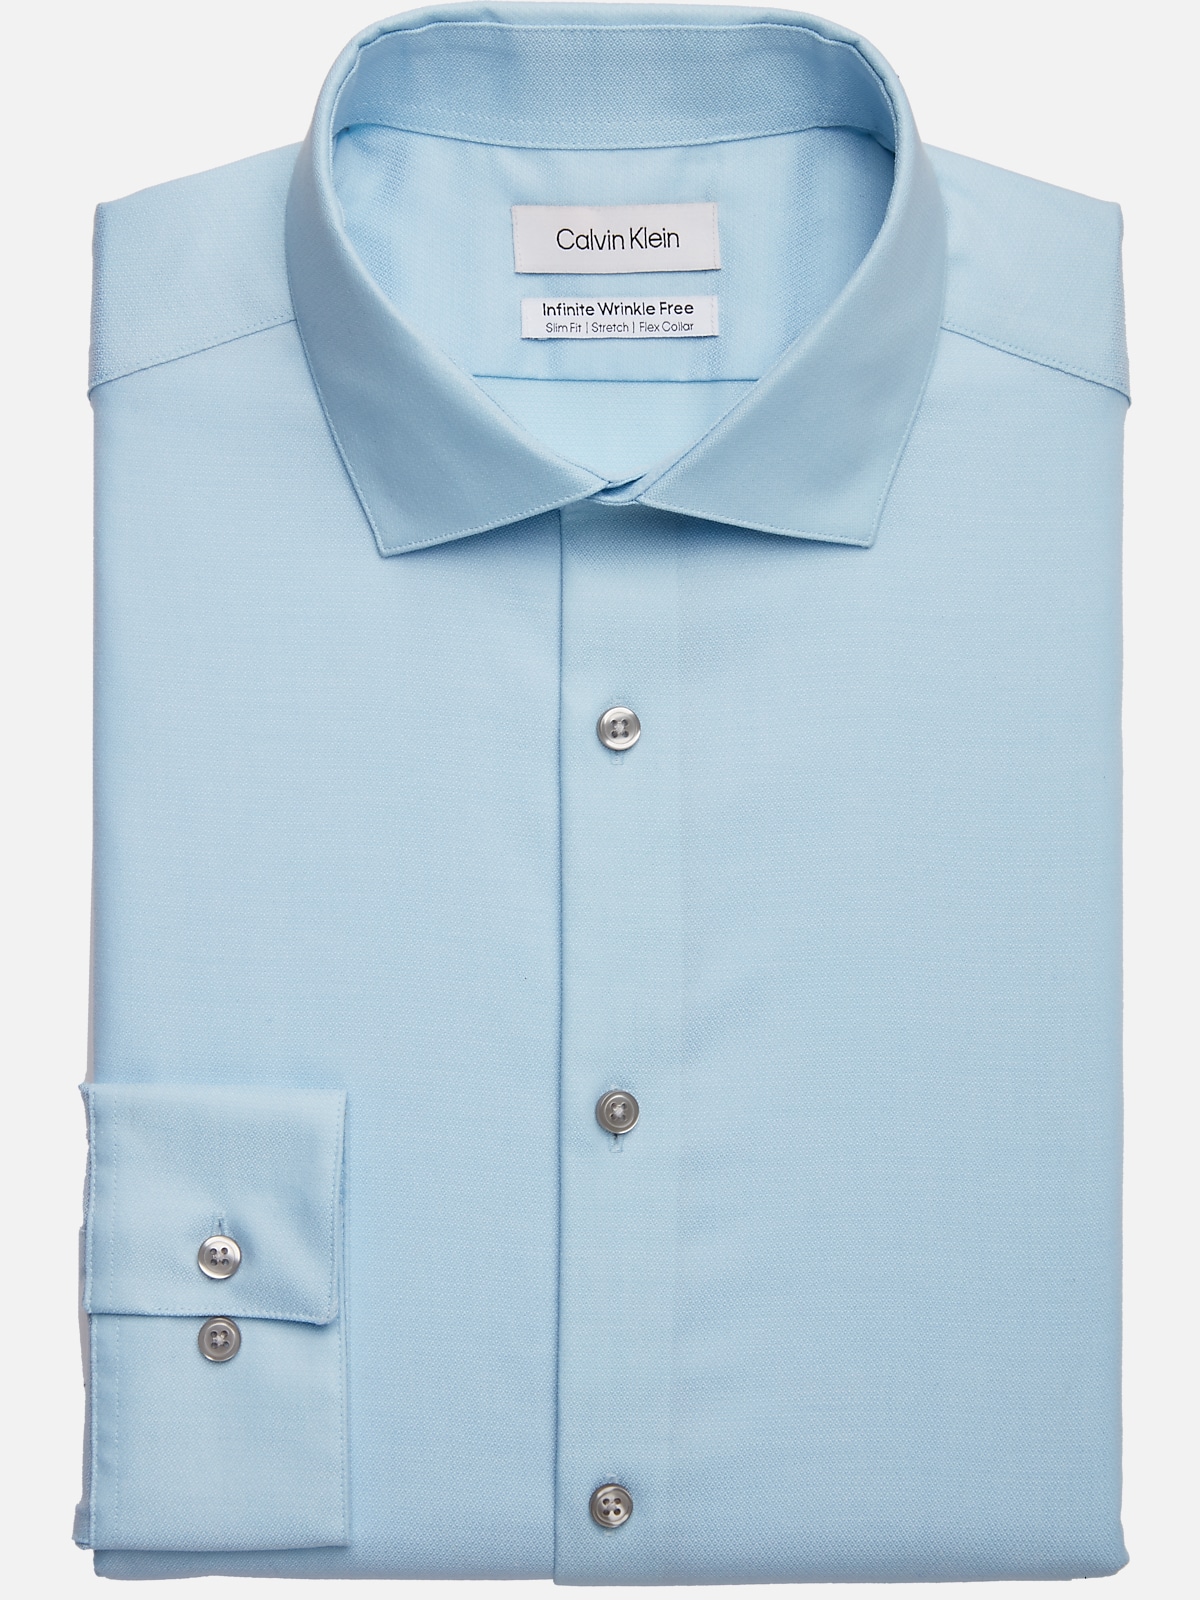 Calvin Klein Infinite Wrinkle Free Slim Fit Stretch Collar Dress Shirt |  Clearance Dress Shirts| Men's Wearhouse